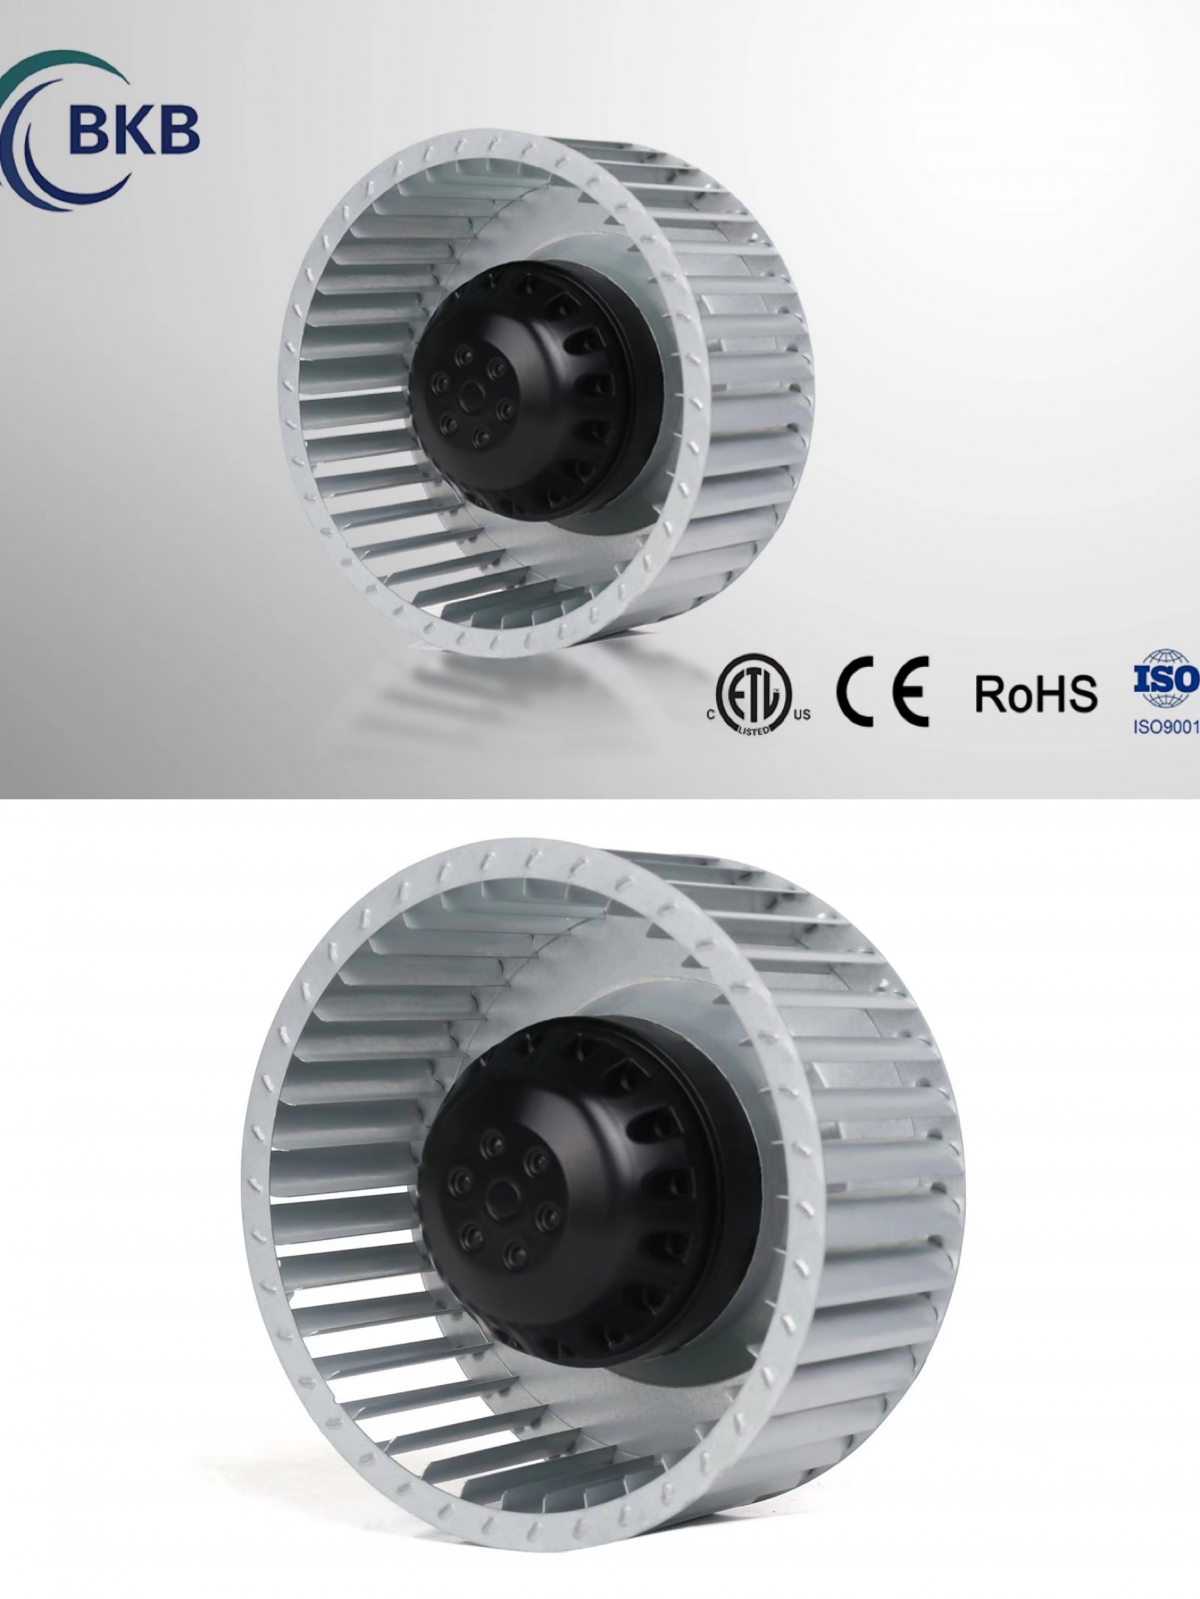 EC FAN DC FAN Forward curved centrifugal fans ETL LISTED MANUFACTURER PRODUCER IN CHINA .-SUNLIGHT BLOWER,Centrifugal Fans, Inline Fans,Motors,Backward curved centrifugal fans ,Forward curved centrifugal fans ,inlet fans, EC fans